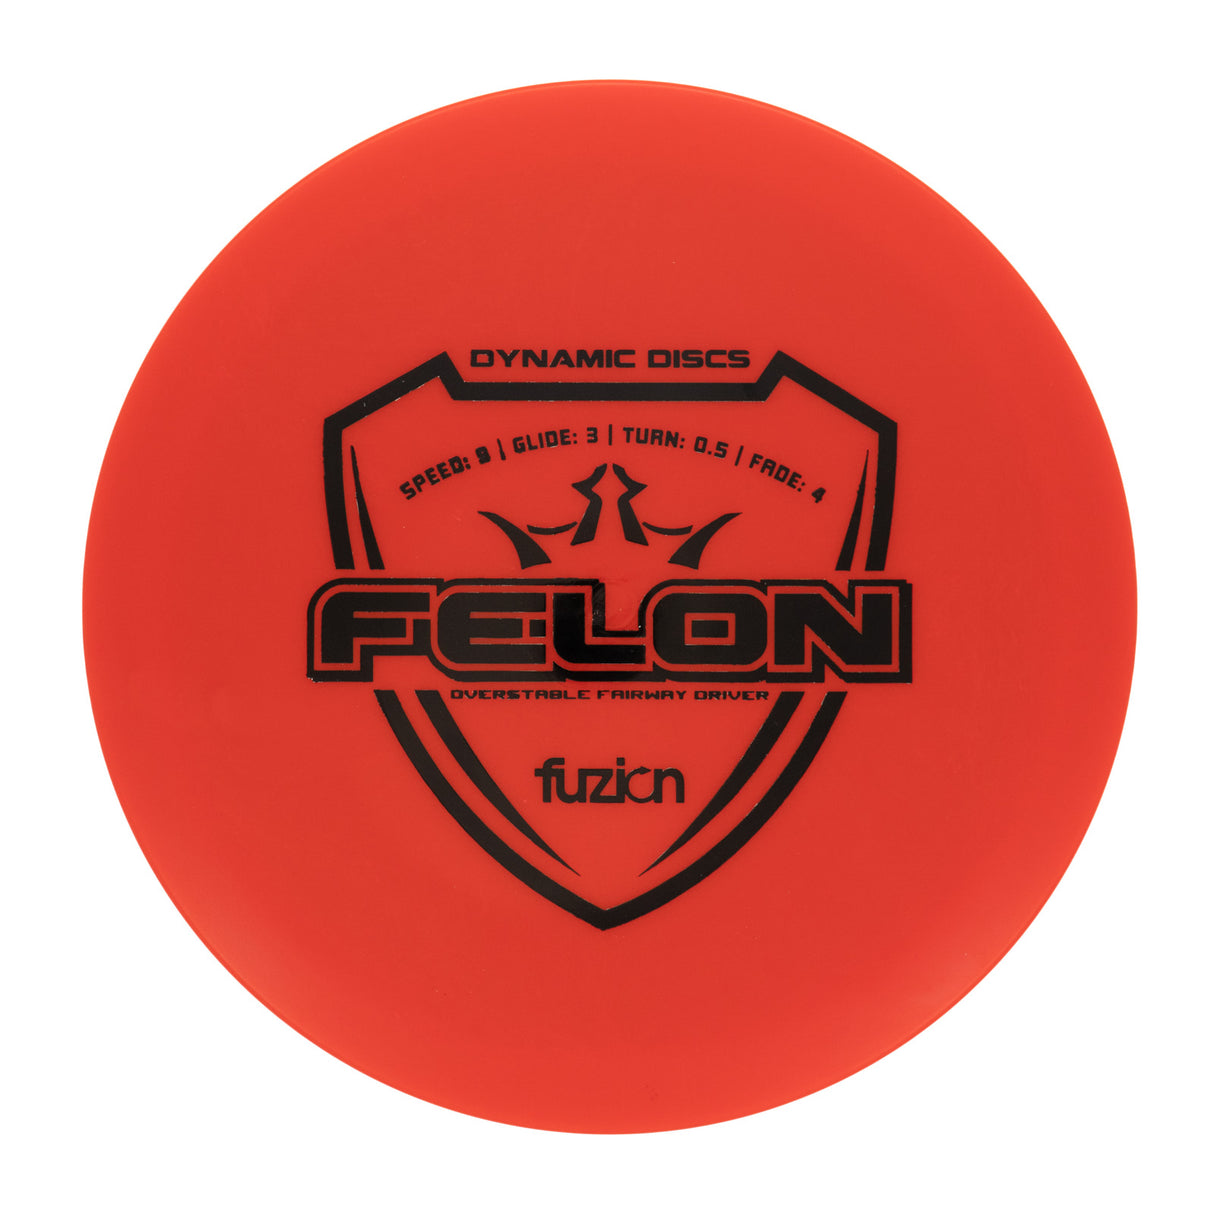 Dynamic Discs Felon - Fuzion 170g | Style 0001